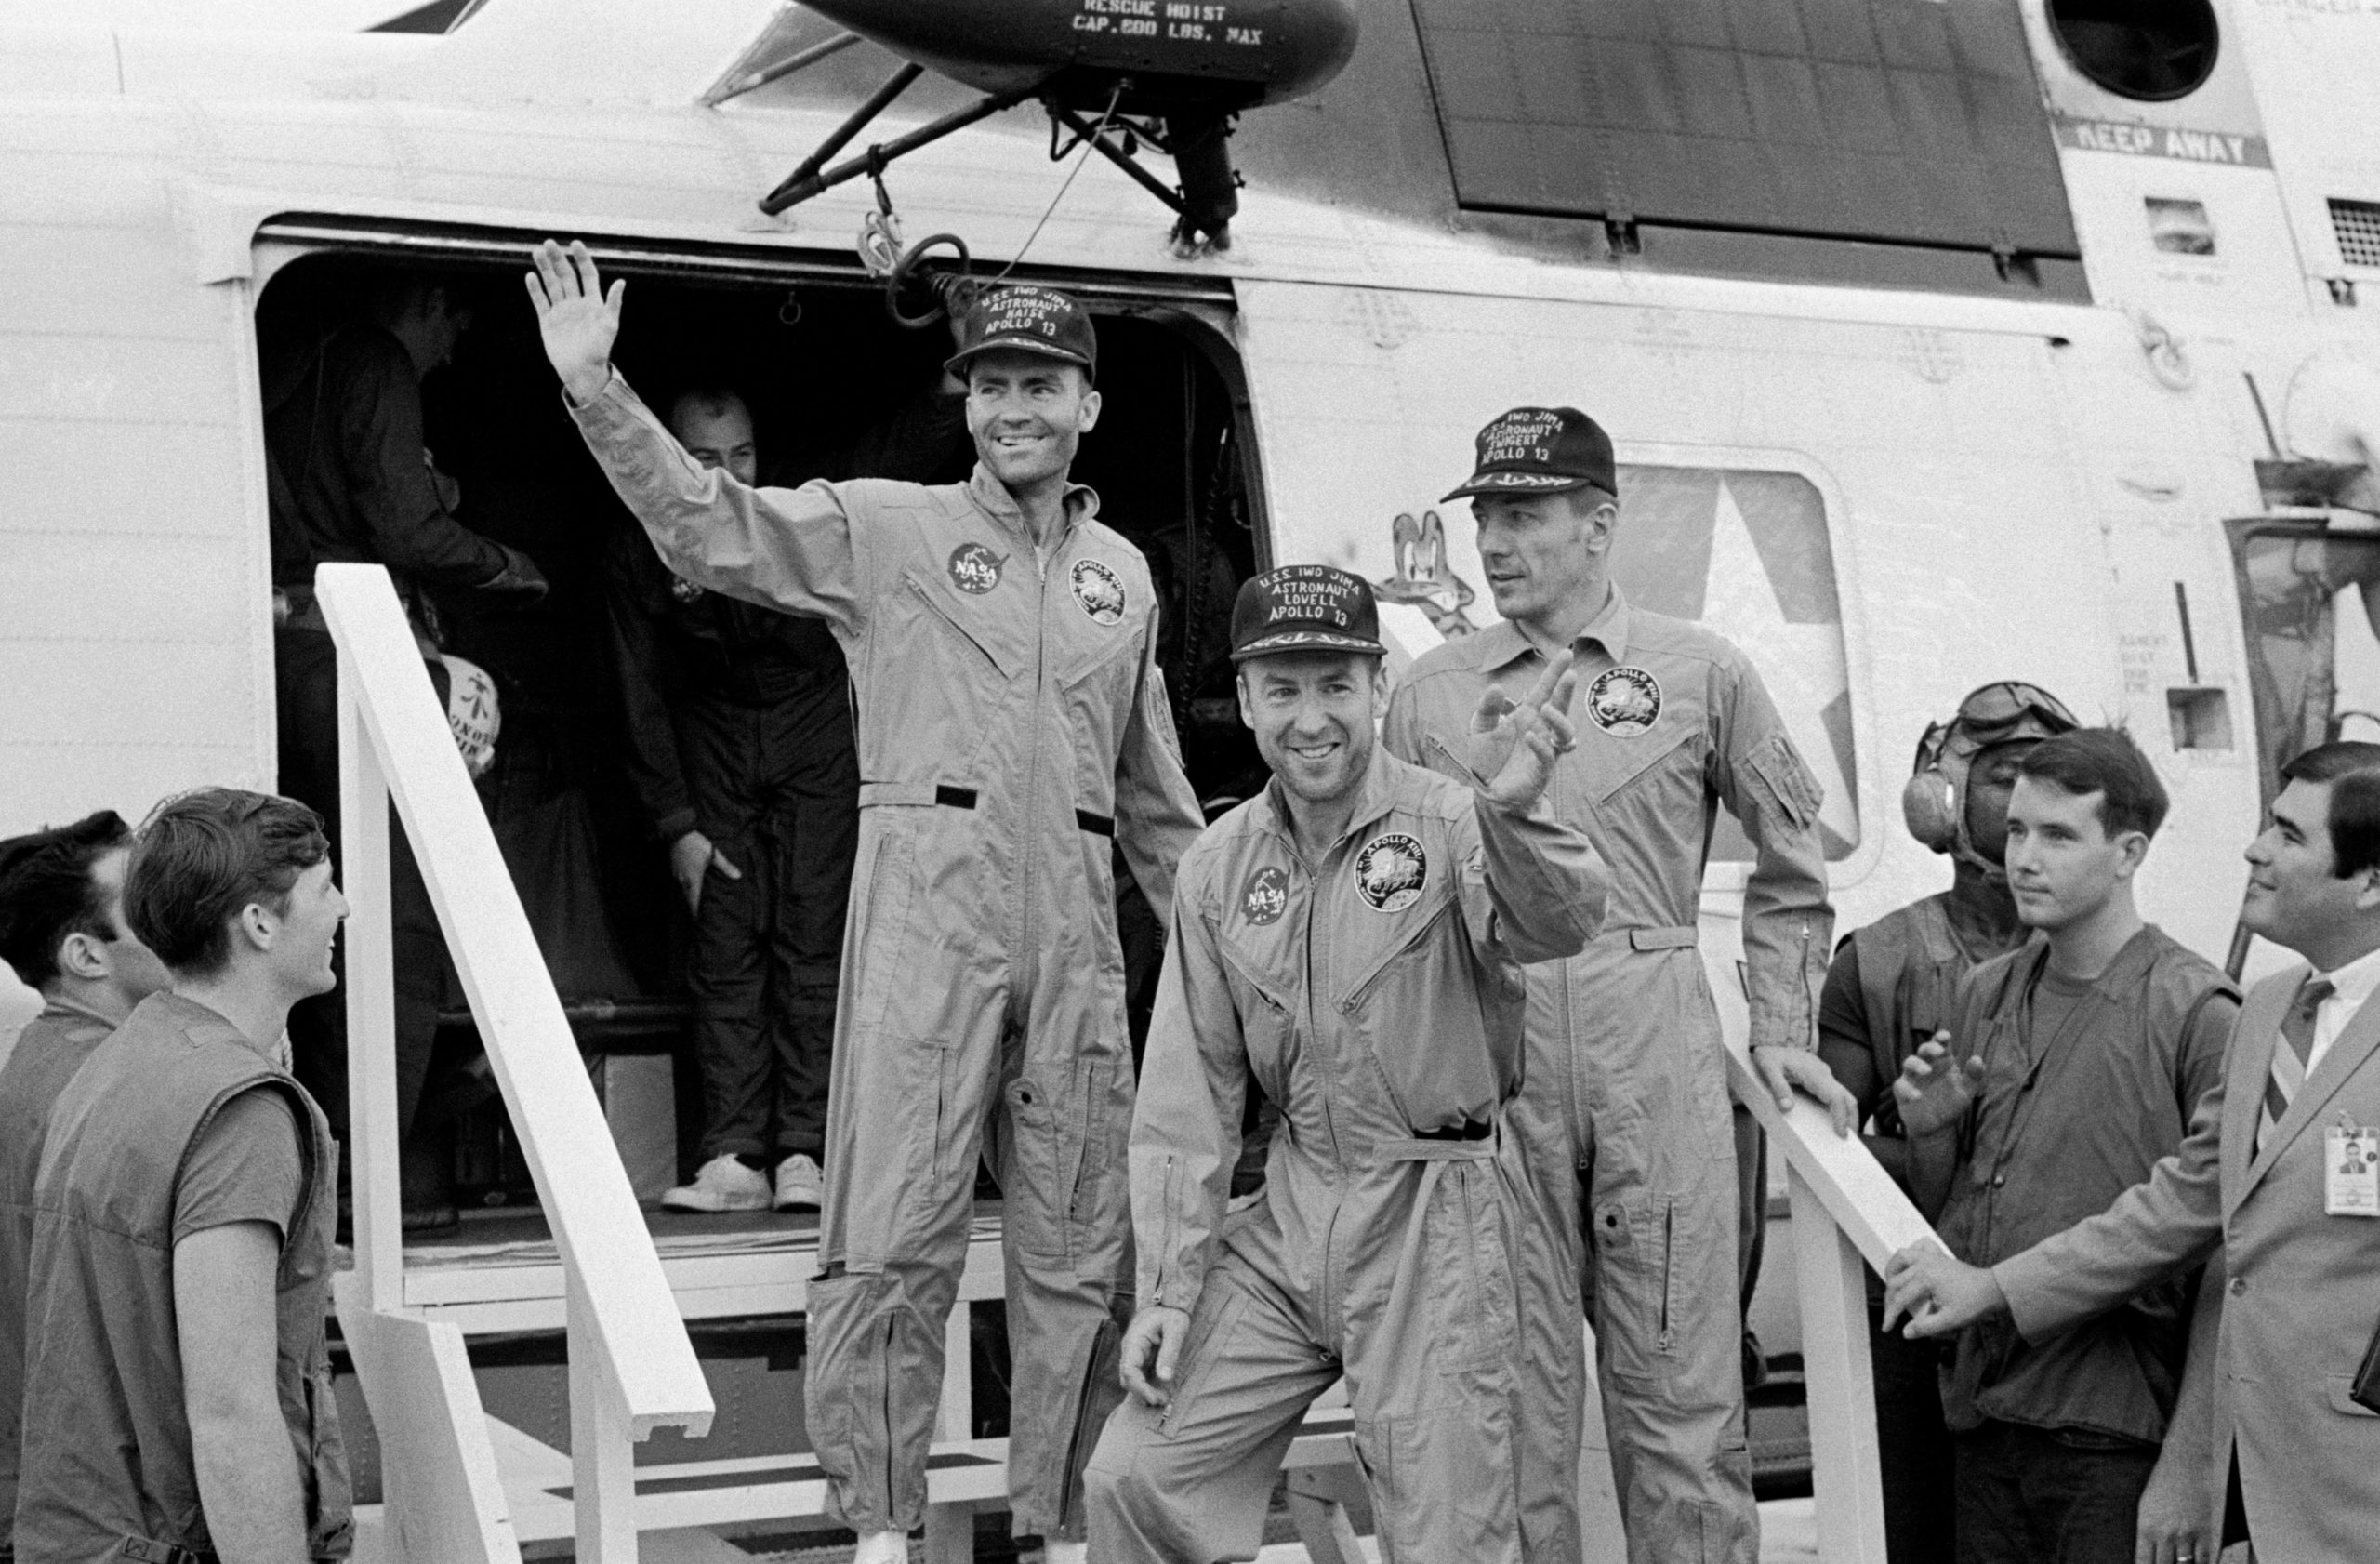 Apollo 13 crew returning home after their ocean landing.